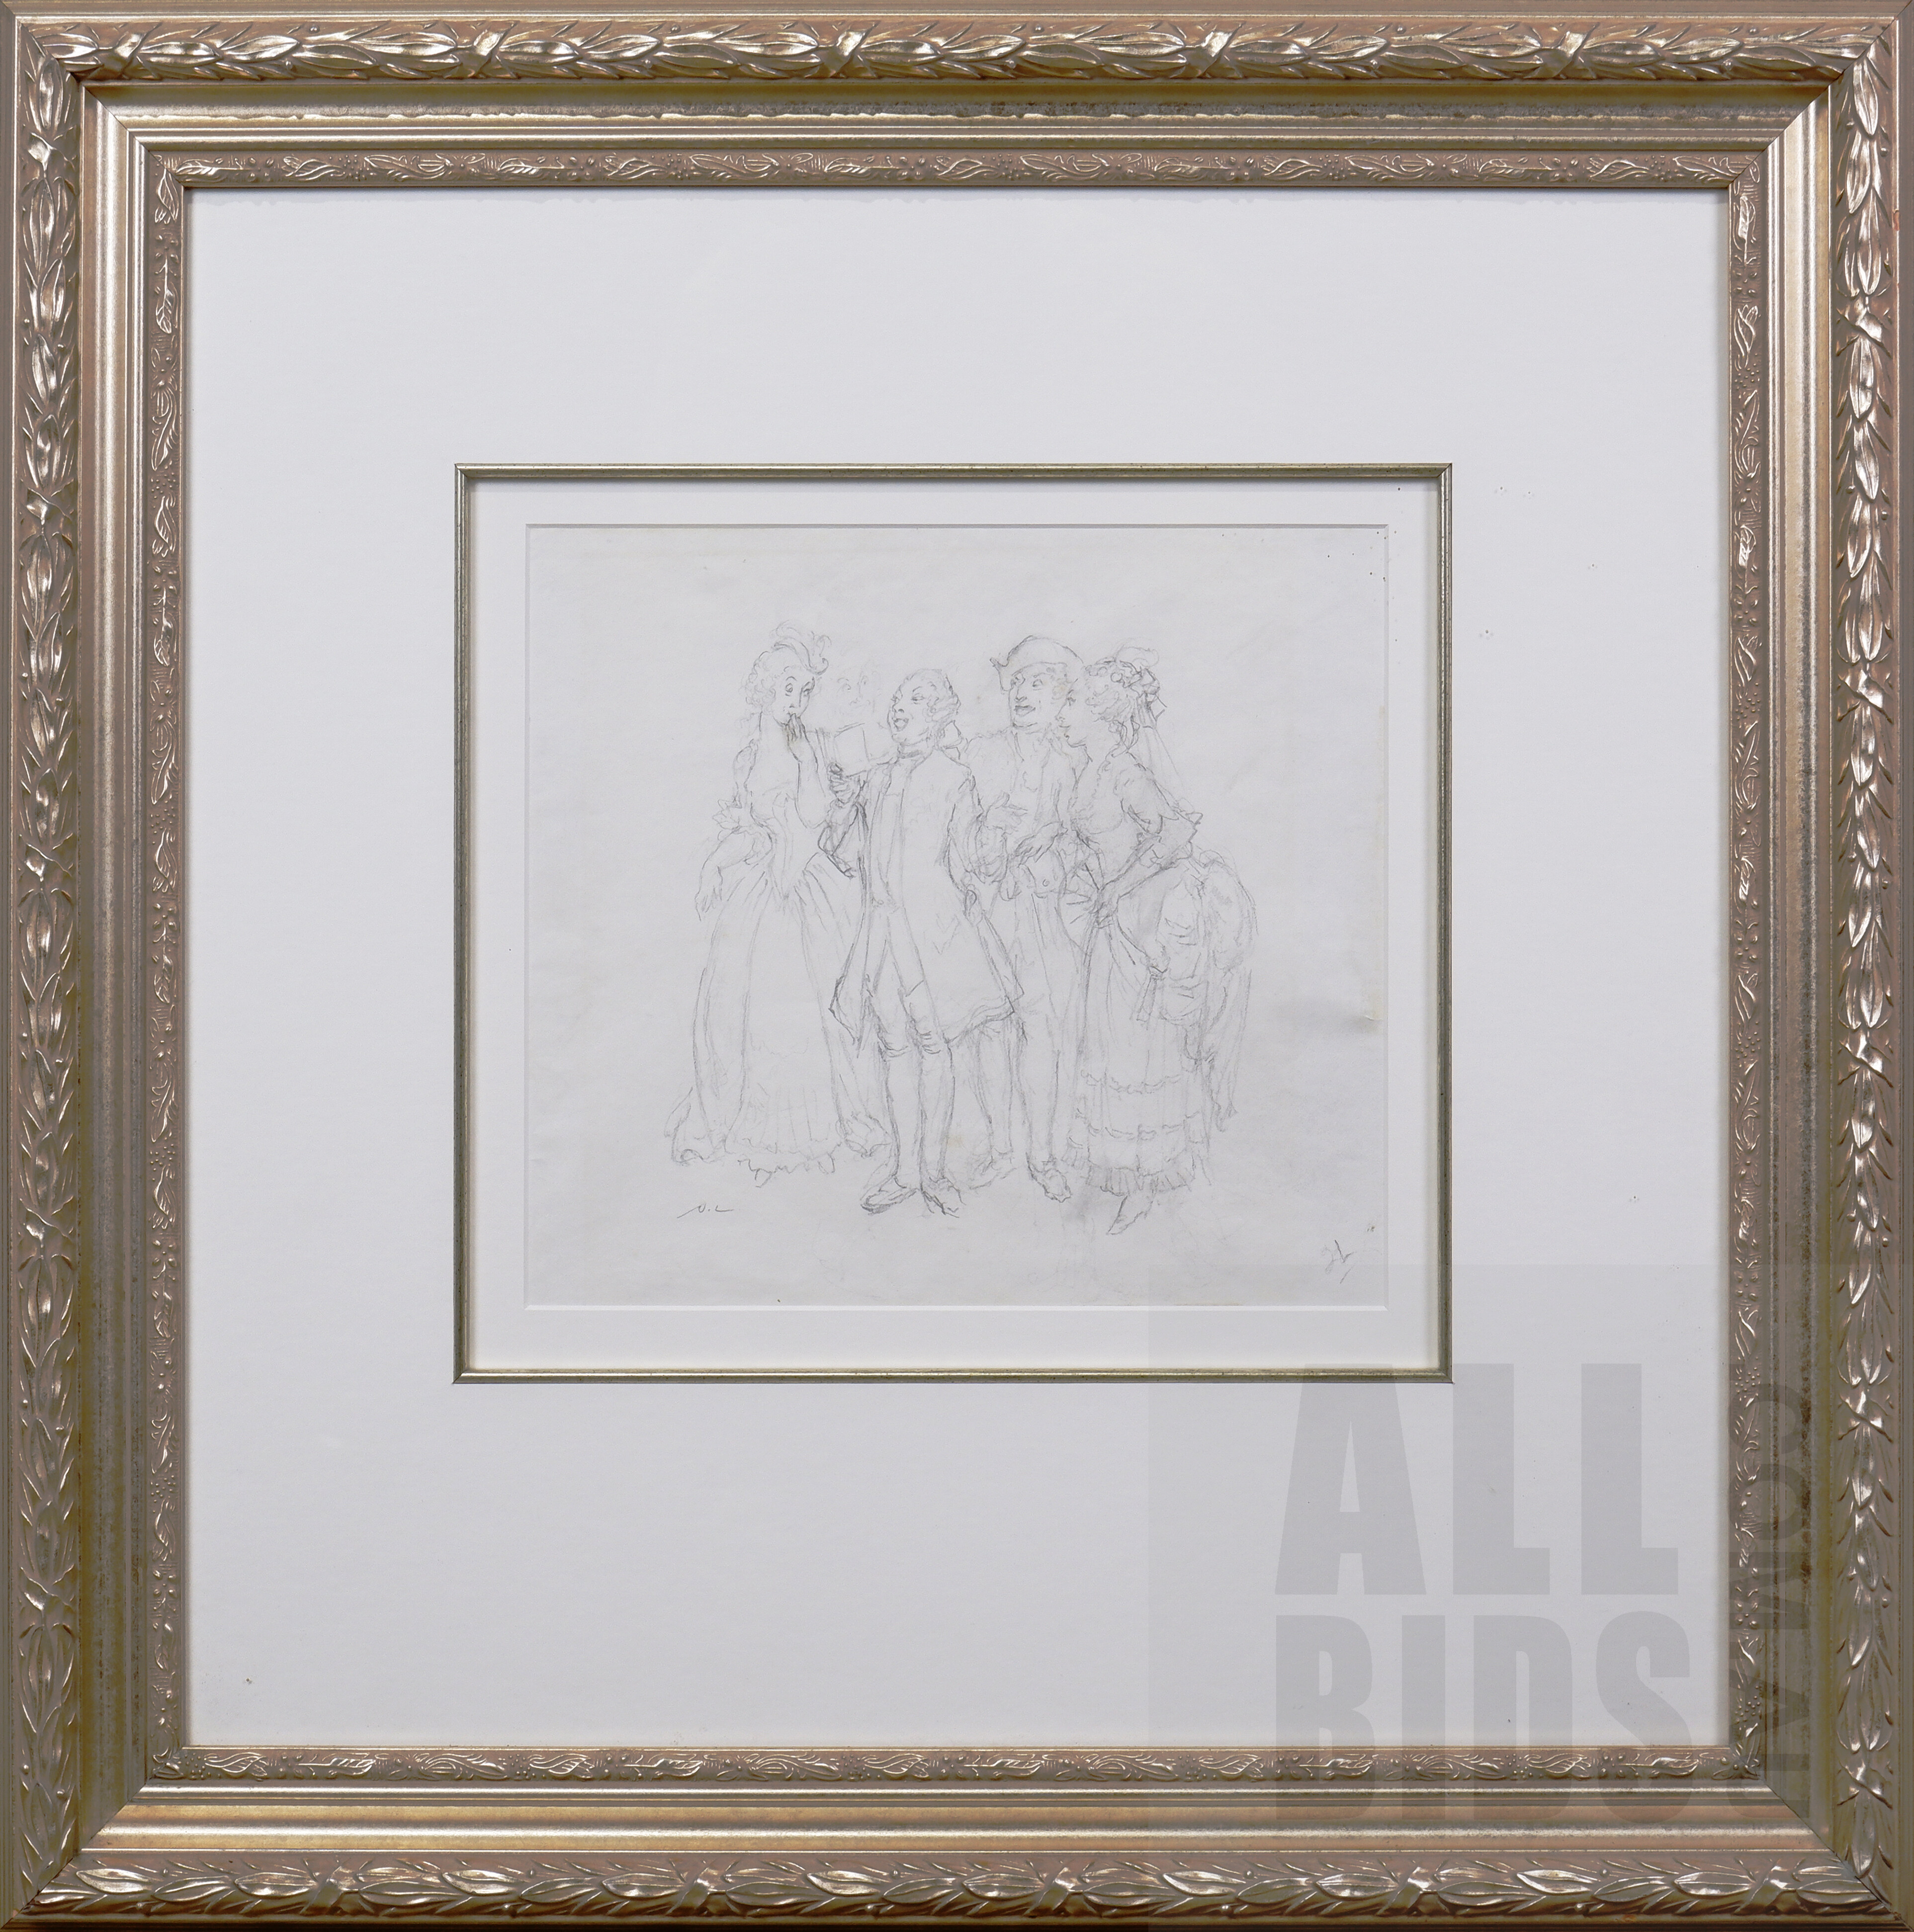 'Norman Lindsay (1879-1969), The Announcement, Pencil, 27 x 30 cm'